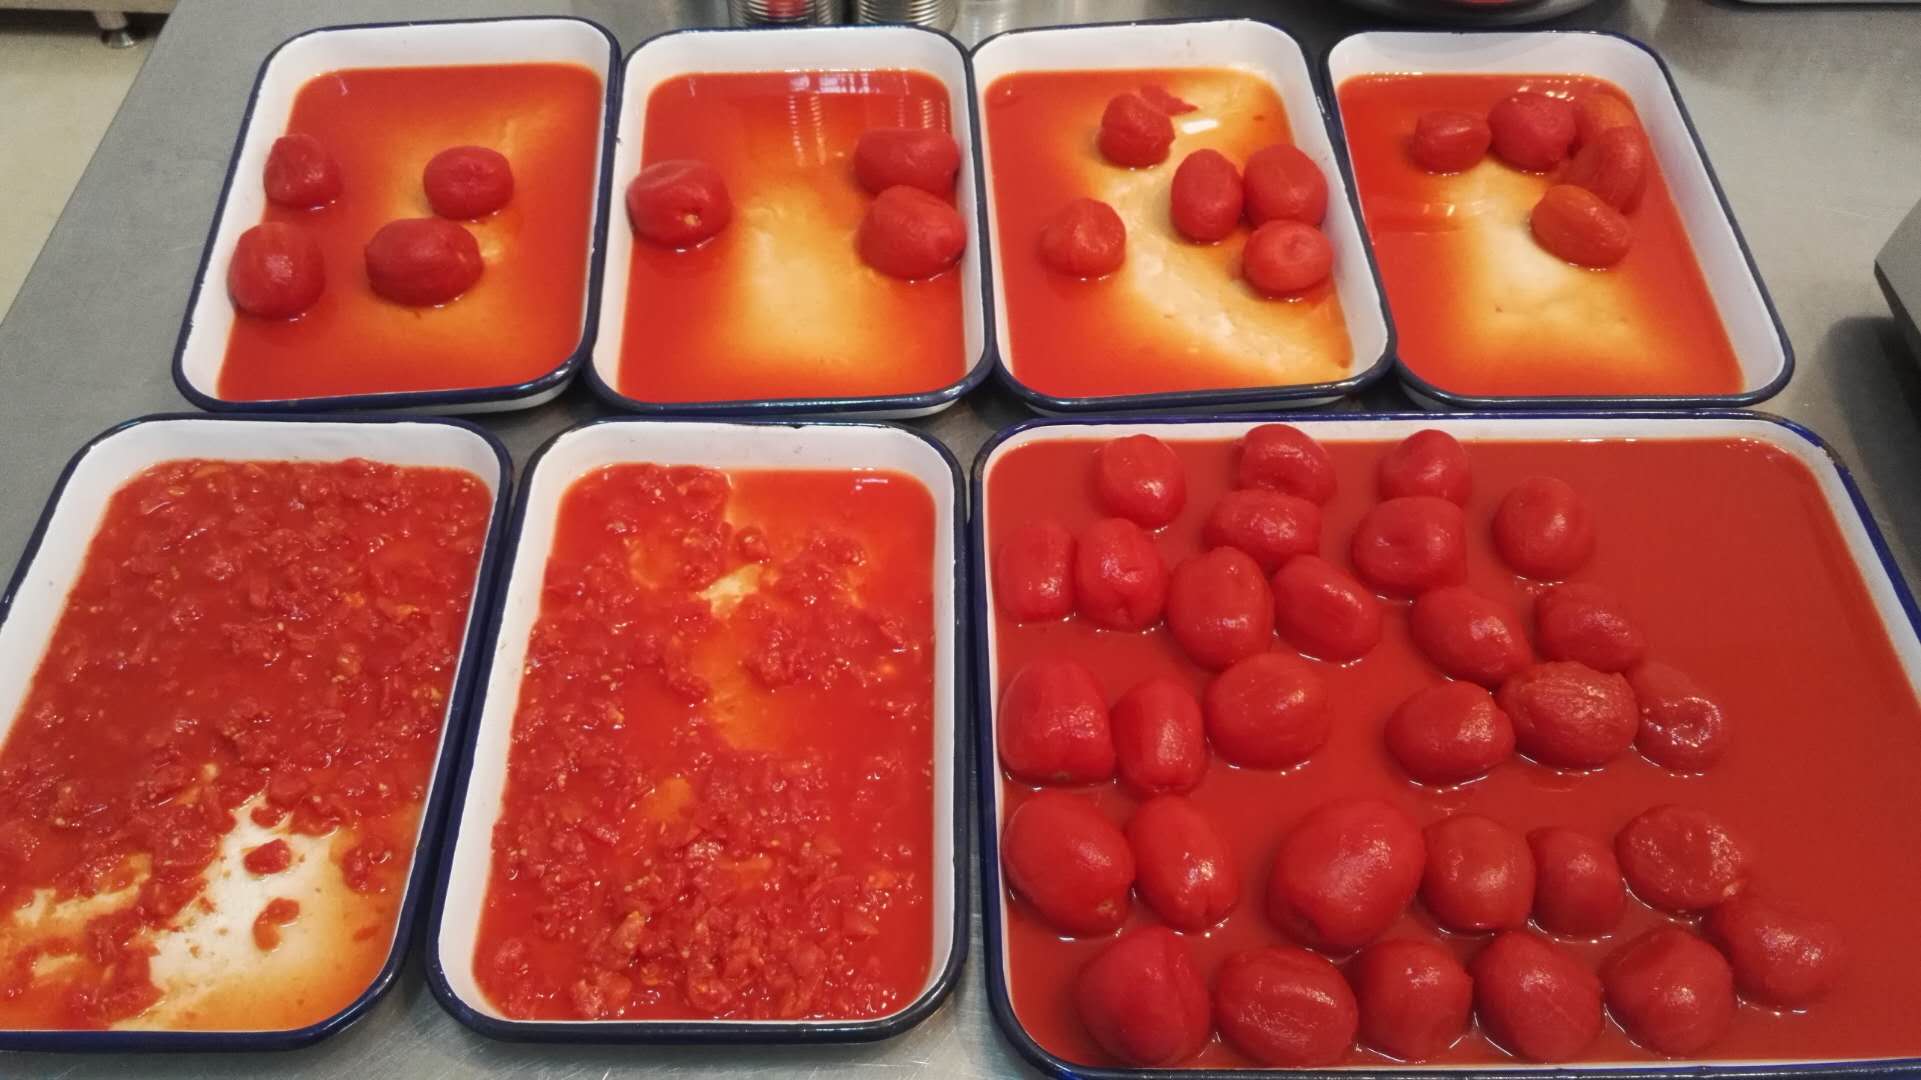 Tomates troceados en lata 400g,800g,2500g,2850g